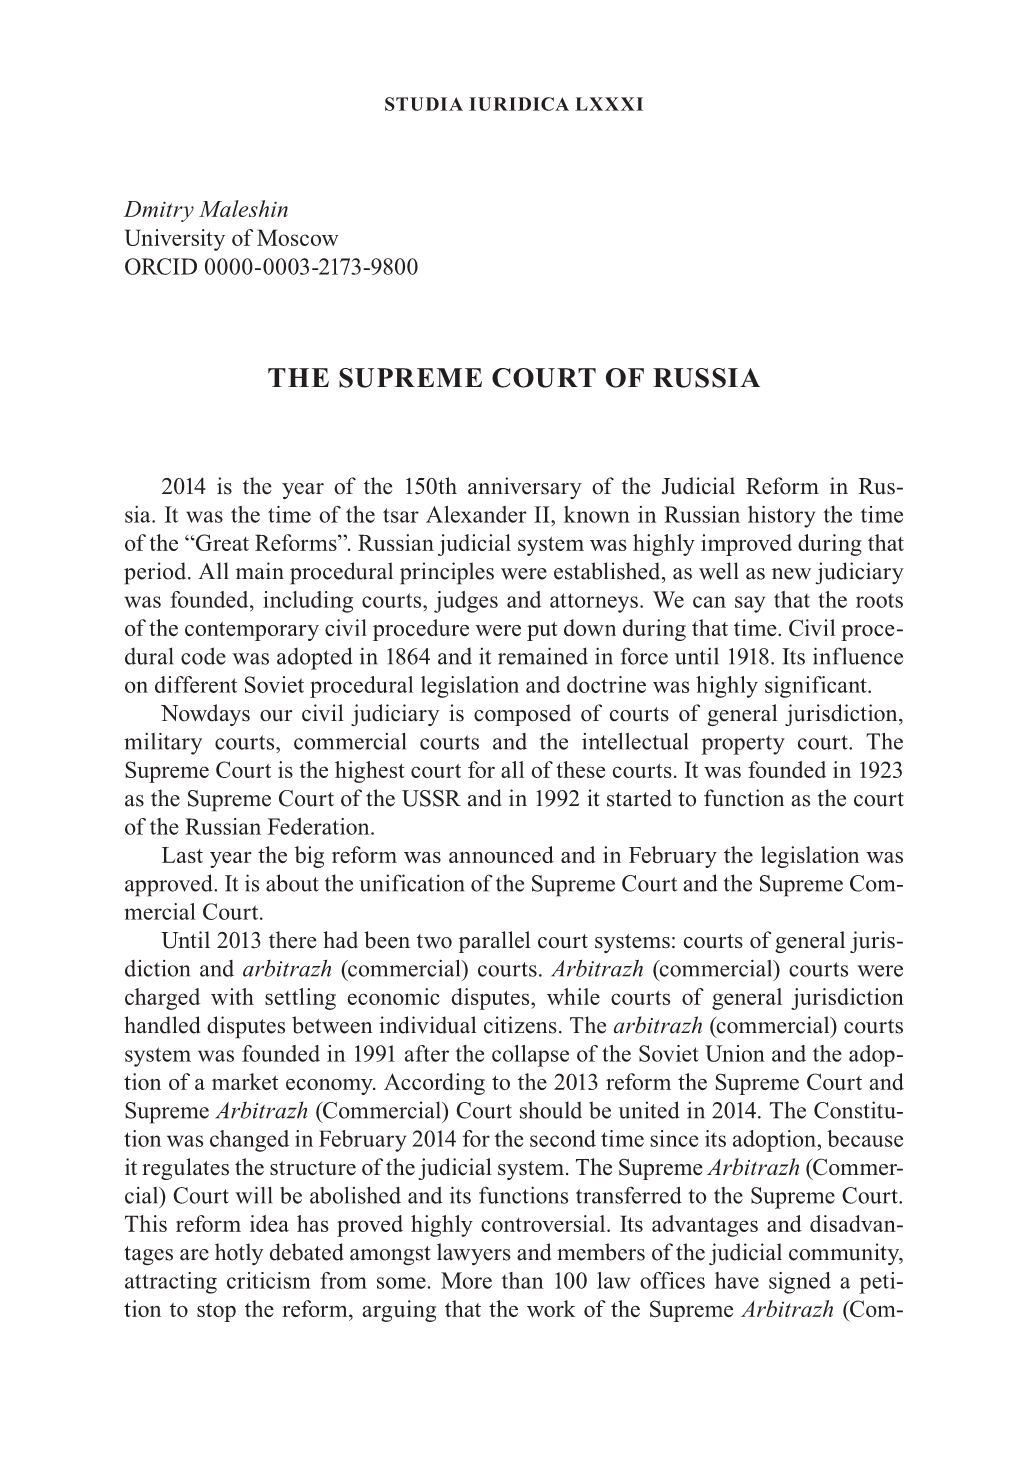 The Supreme Court of Russia